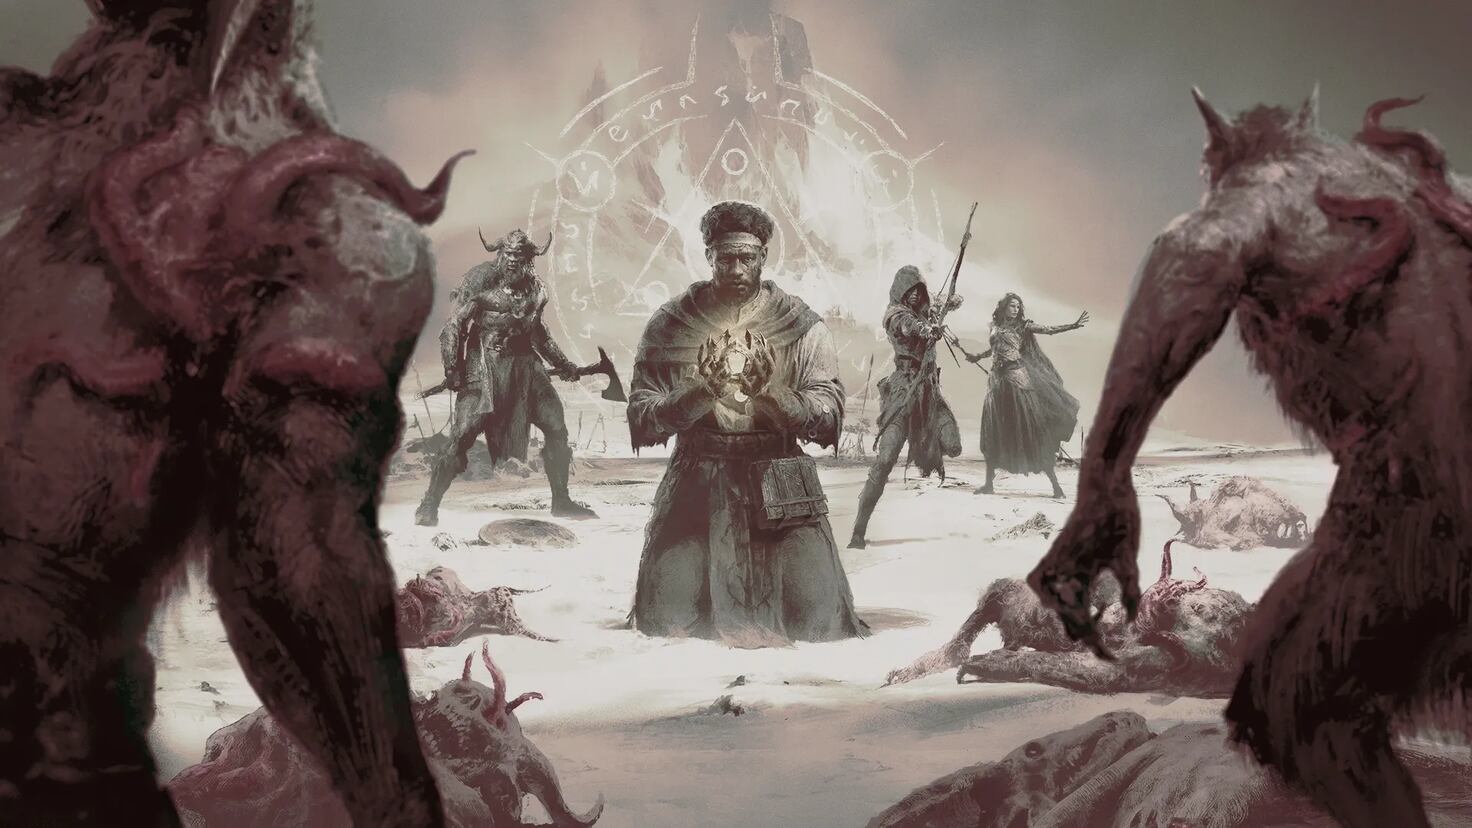 Blizzard reveals details for Diablo 4's second season, Season of